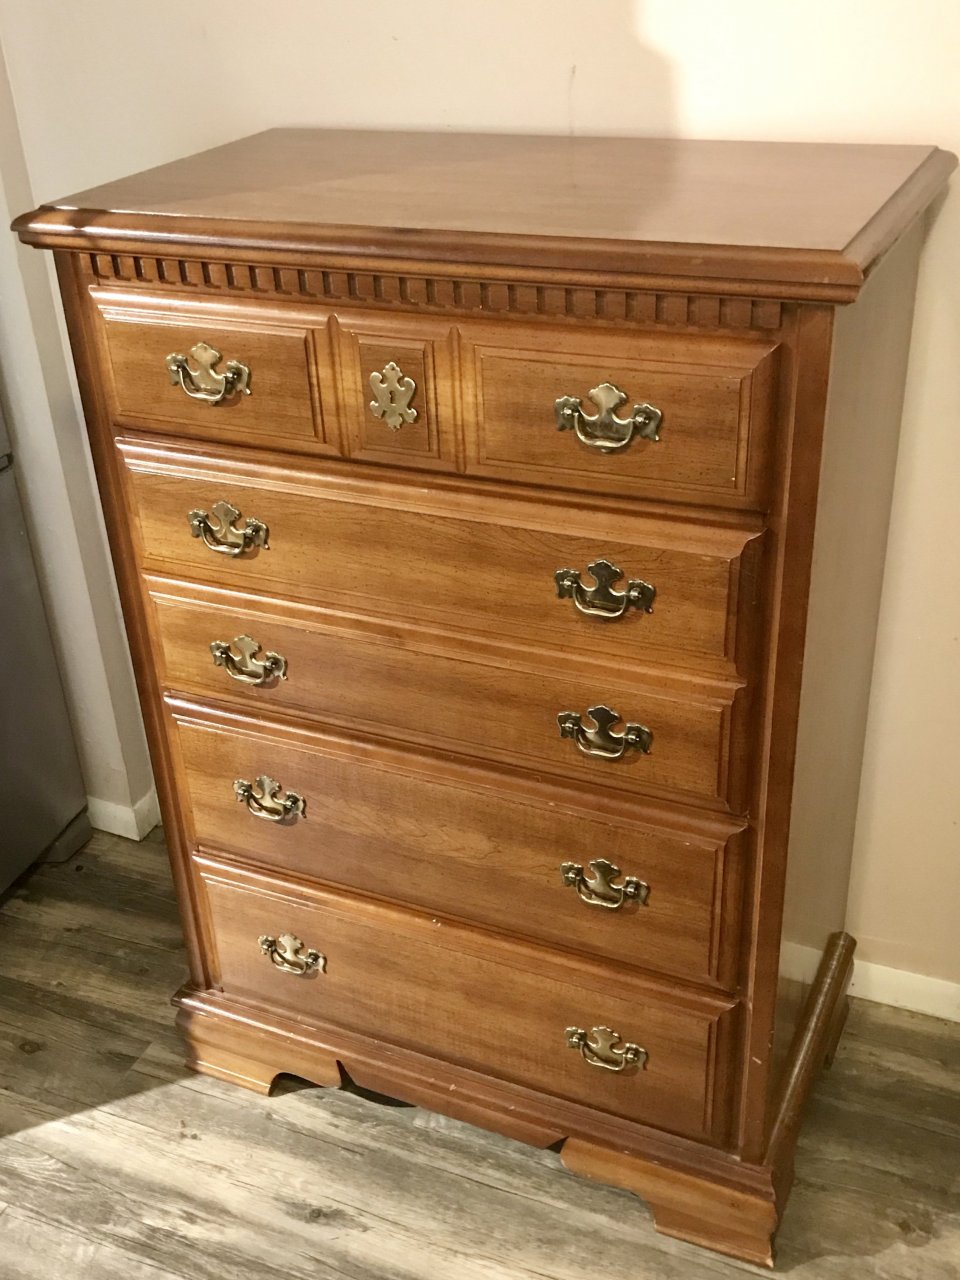 Bassett Furniture Maple Dresser Can’t Find Year Or Worth | My Antique